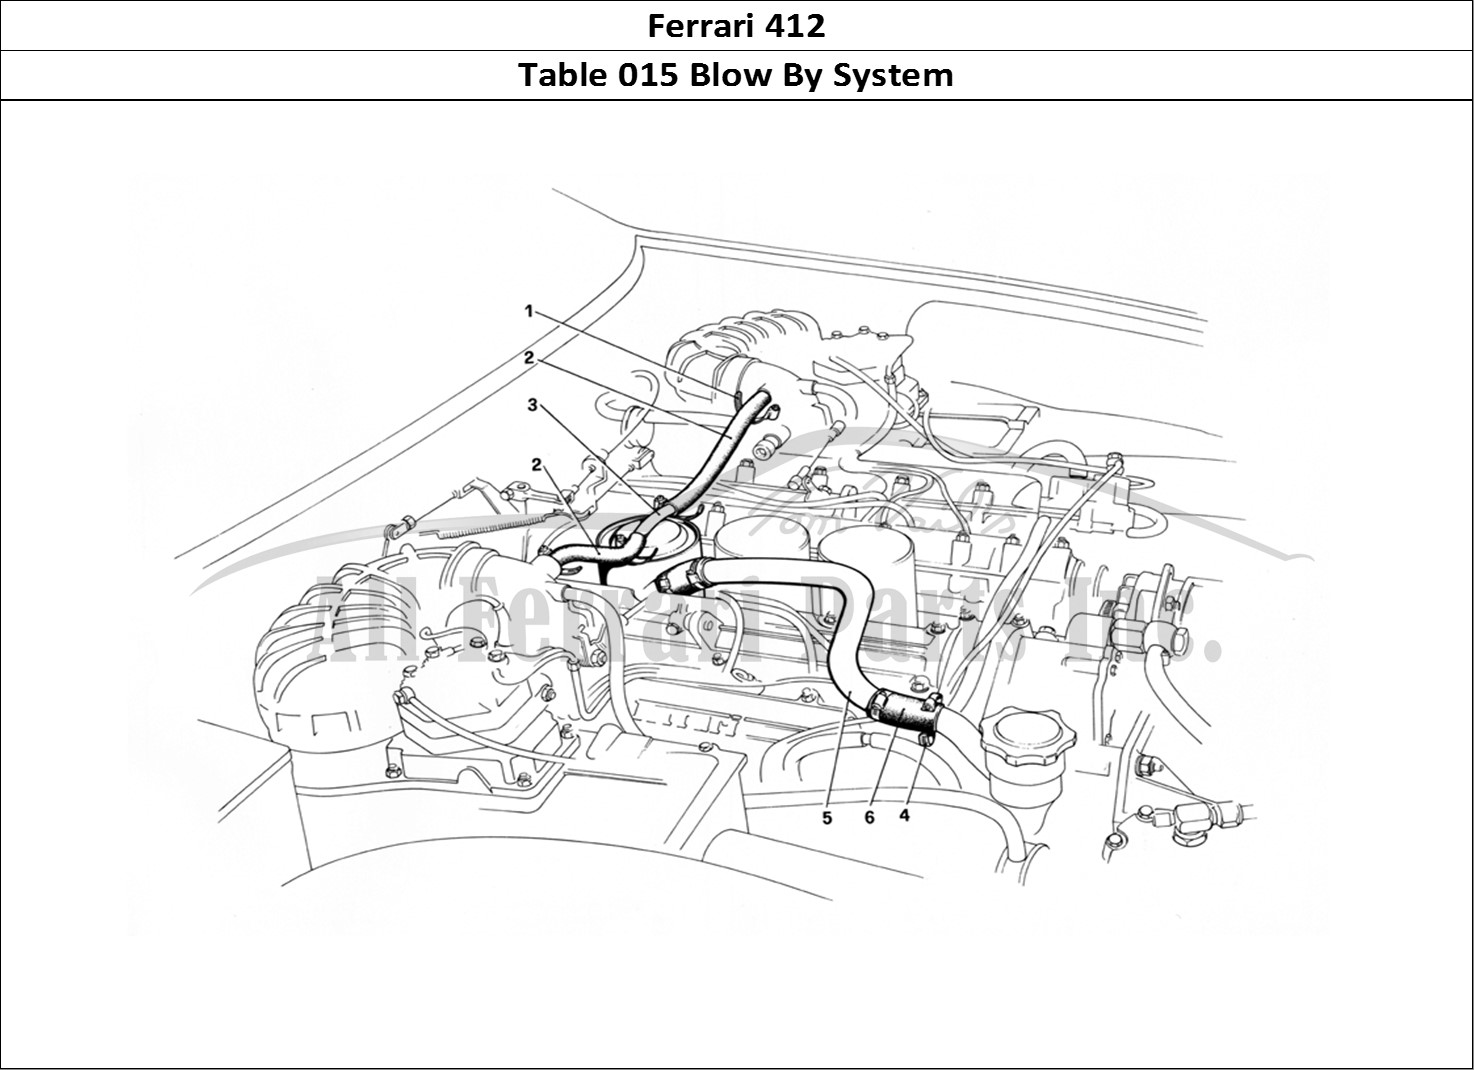 Ferrari Parts Ferrari 412 (Mechanical) Page 015 Blow - By System